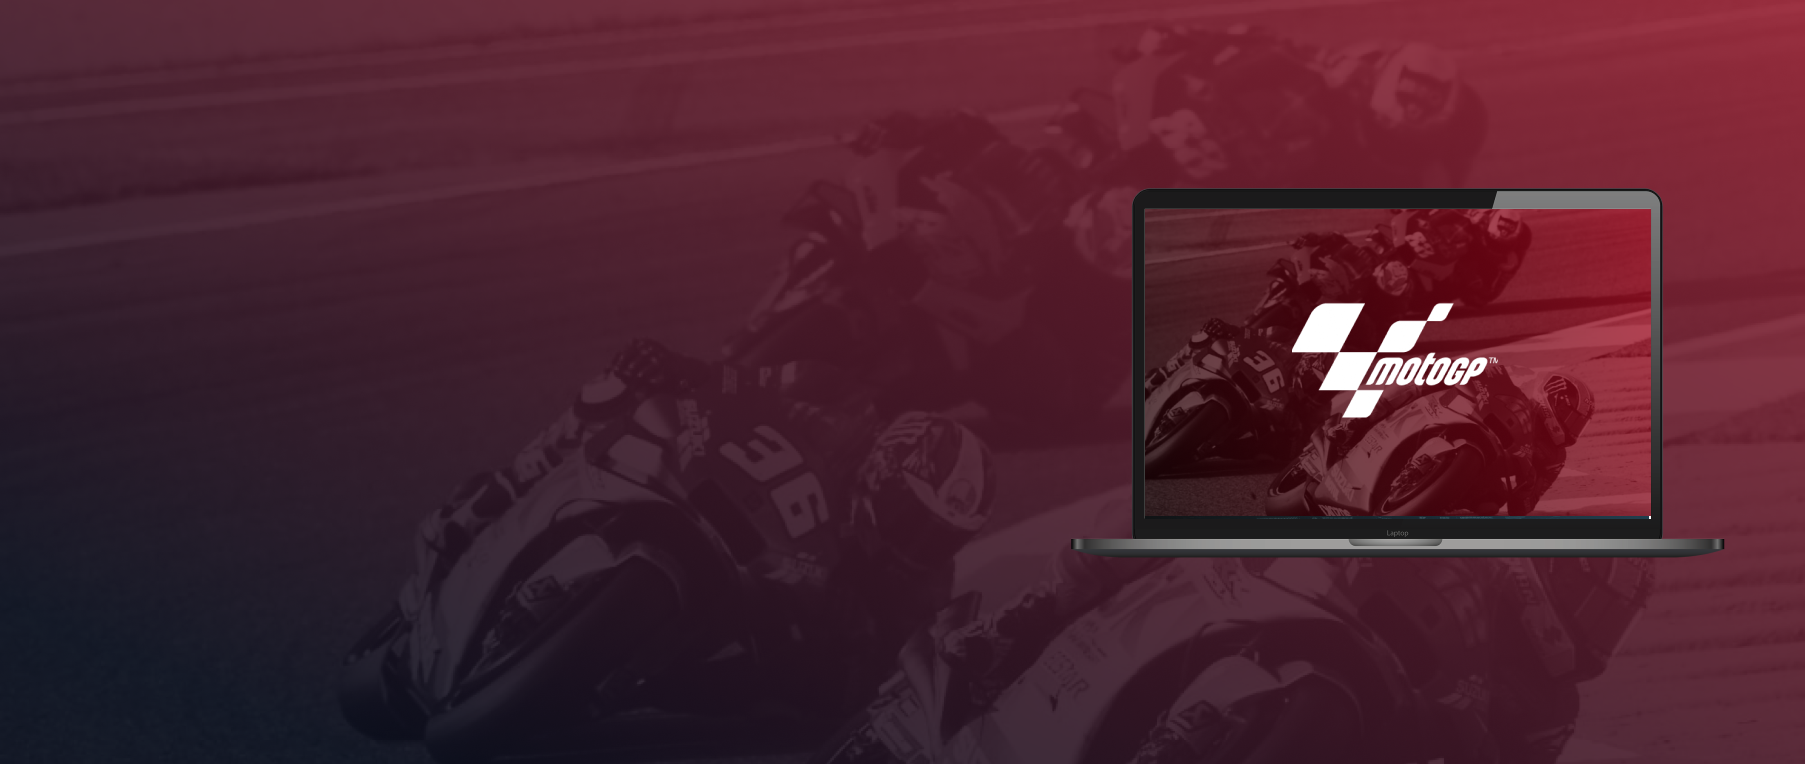 MotoGP hits 30M followers Grabyo Report